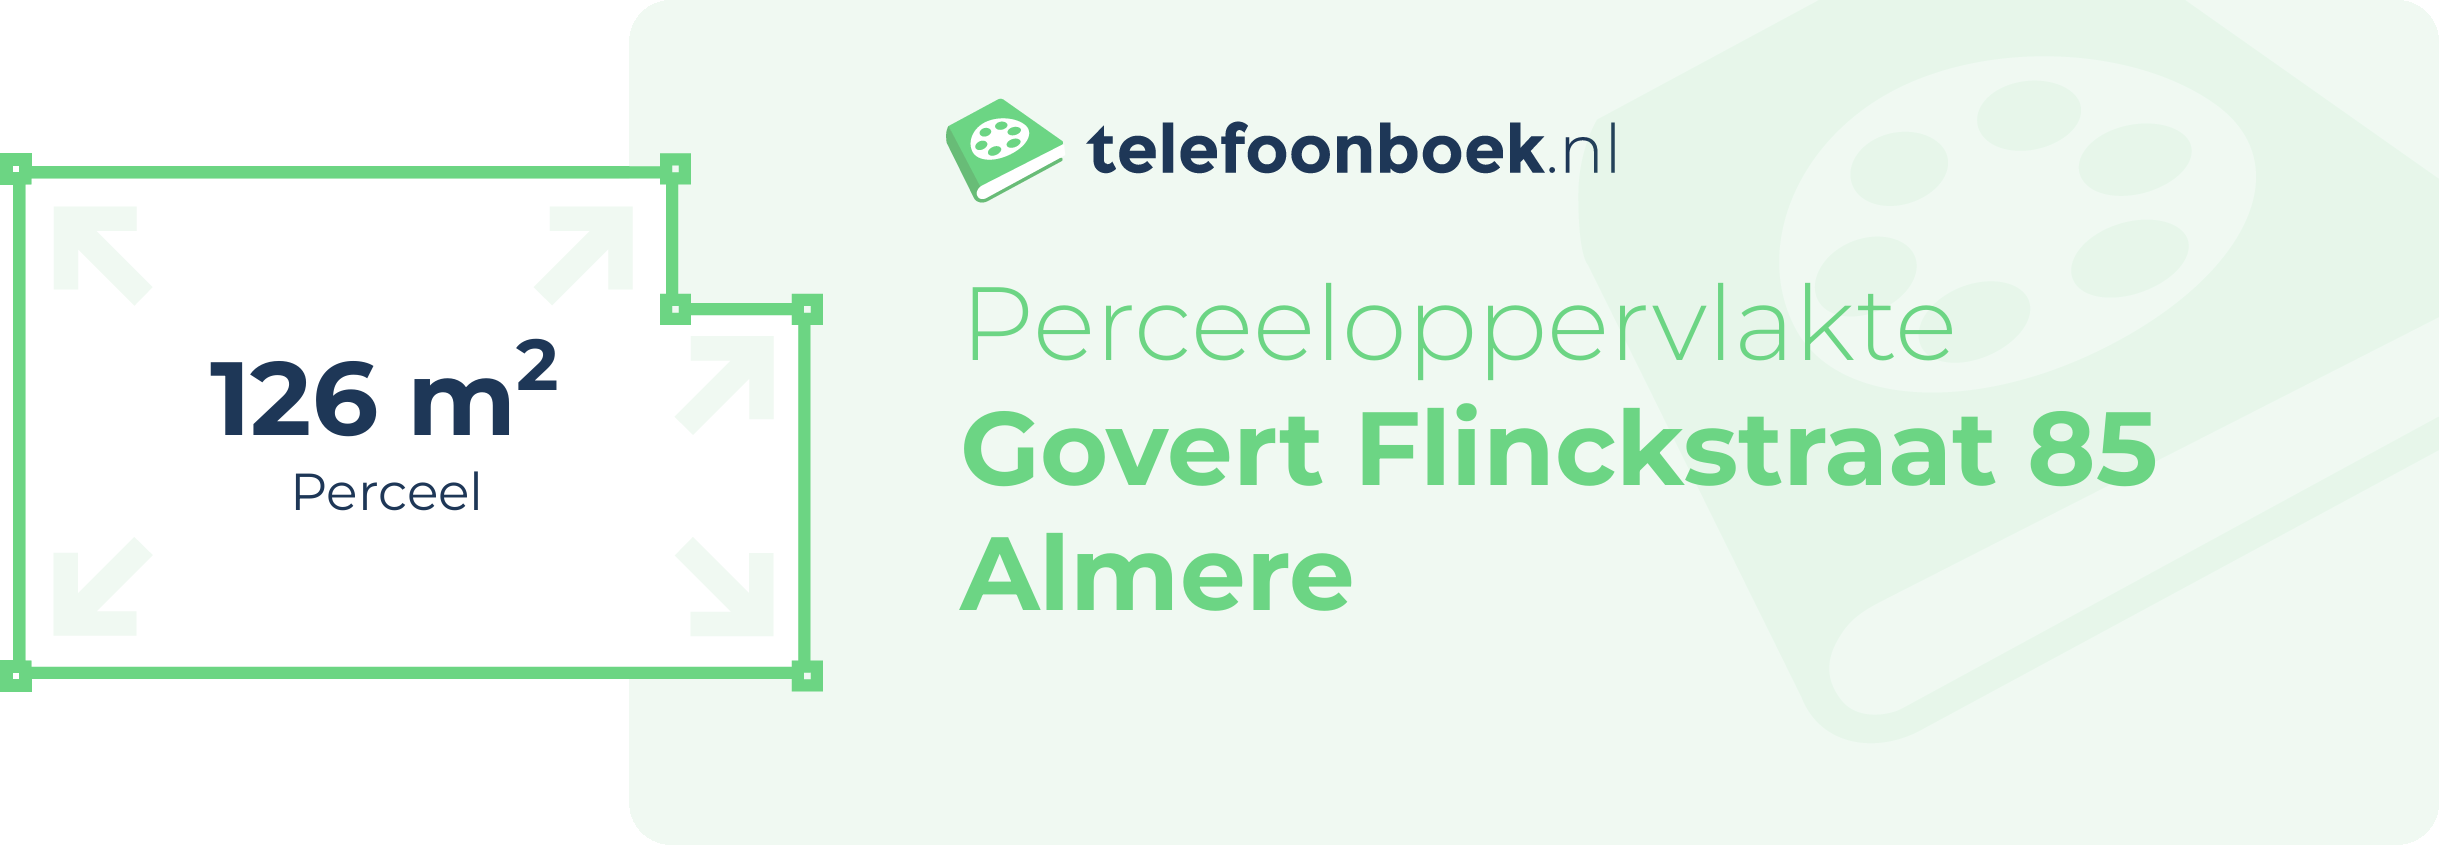 Perceeloppervlakte Govert Flinckstraat 85 Almere